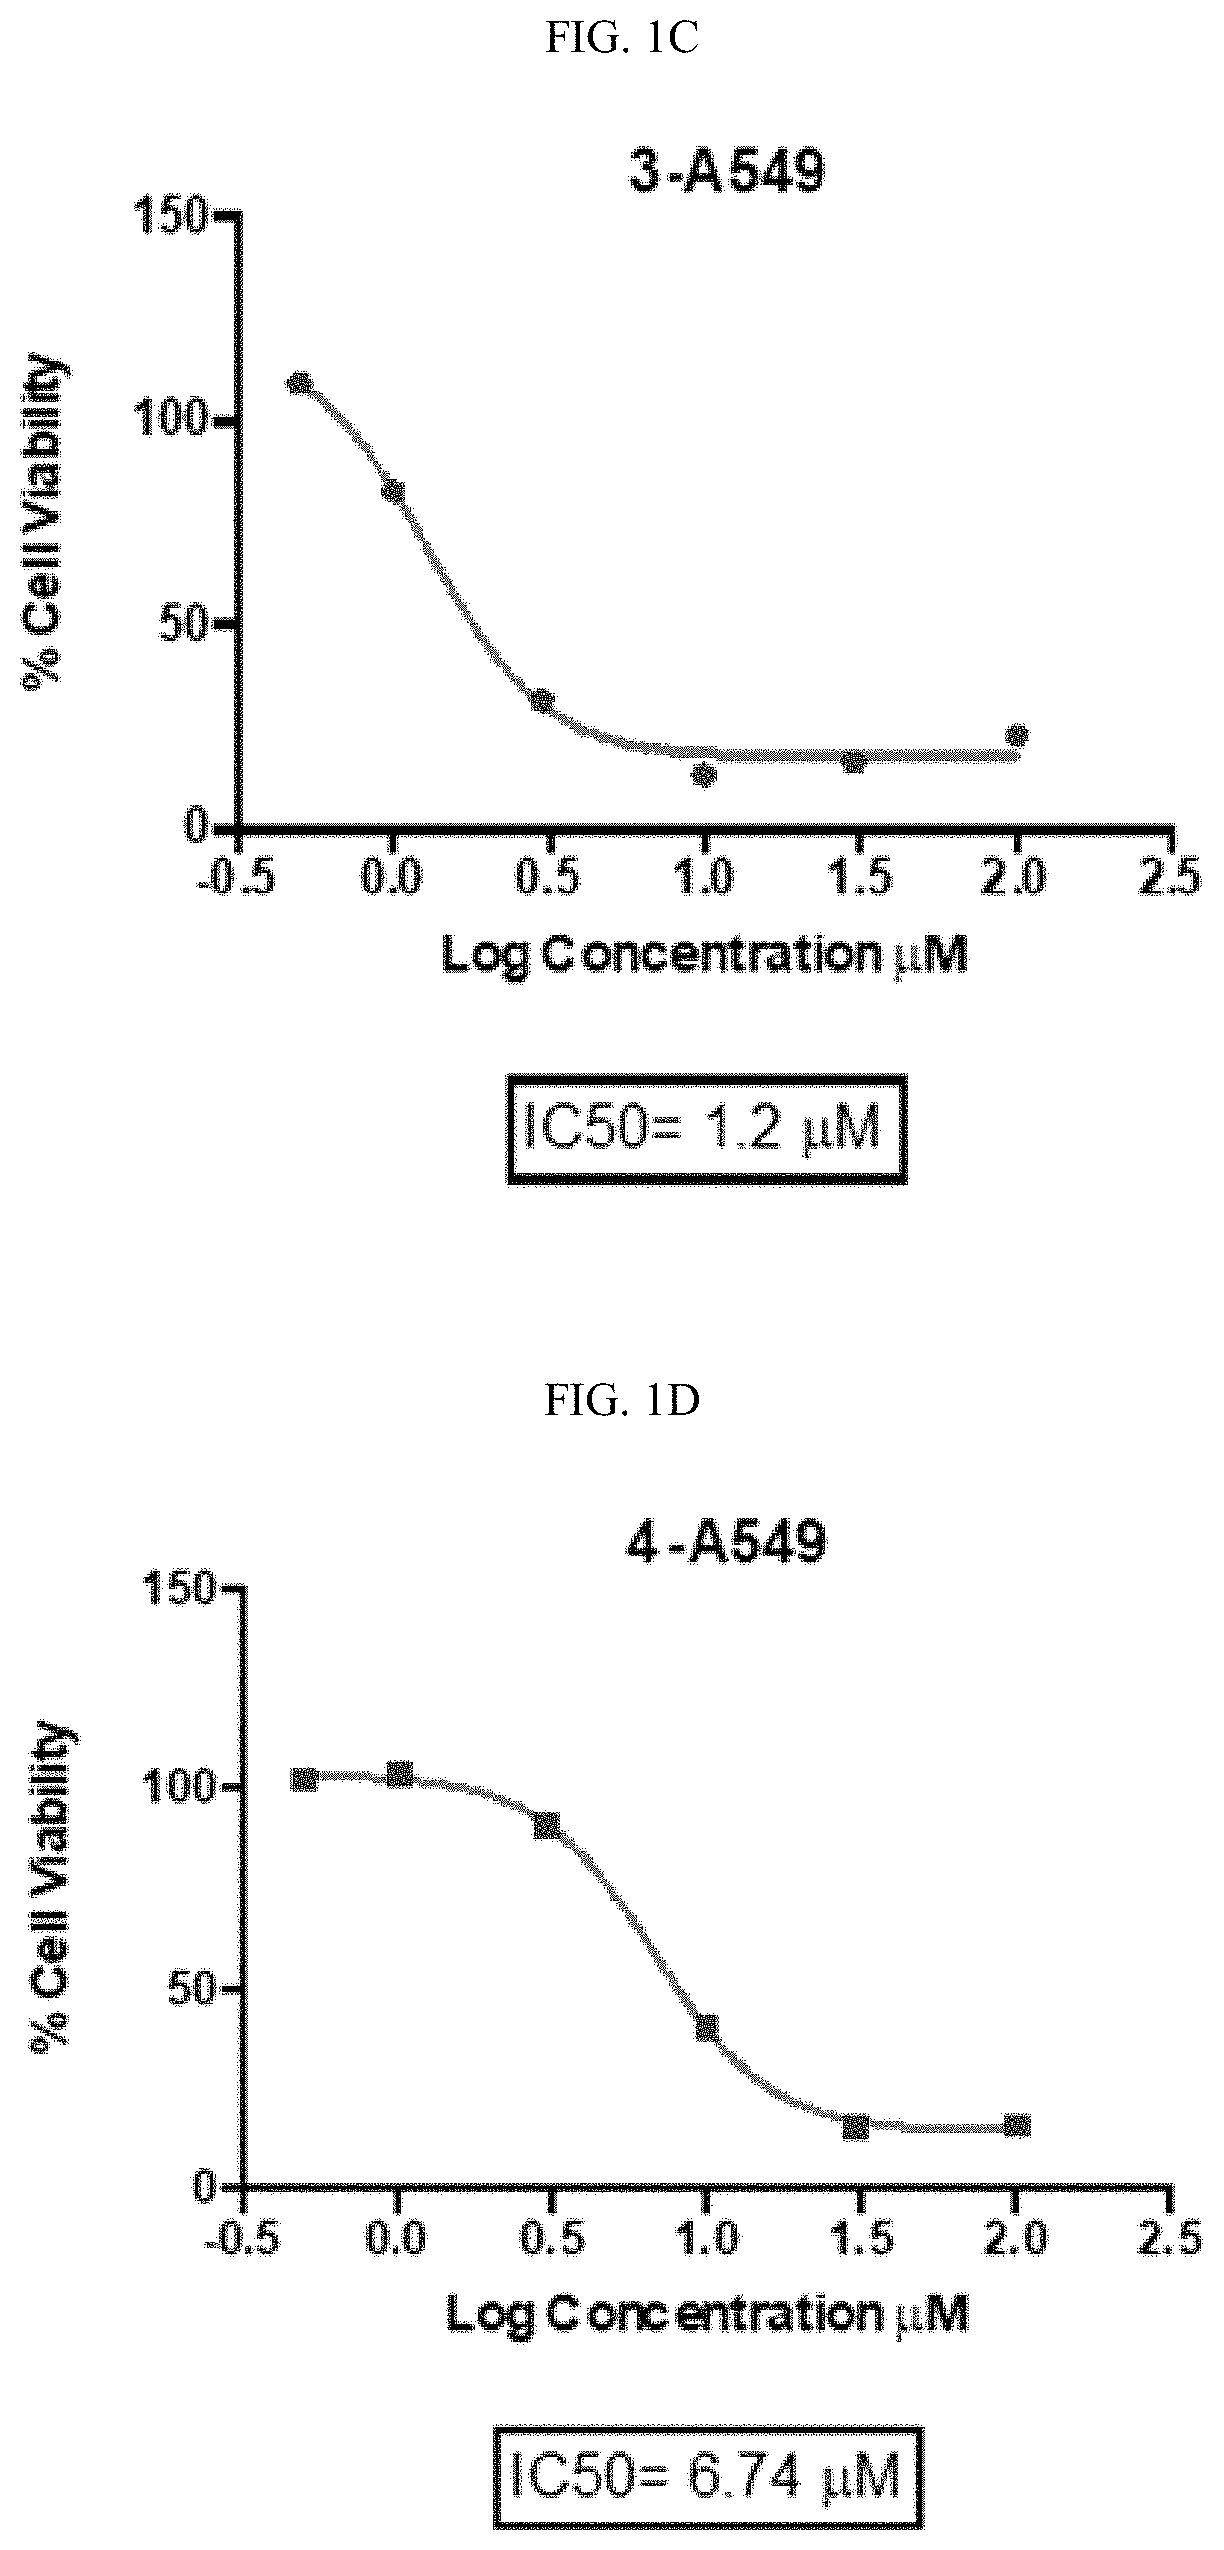 Platinum(II) ammine selenourea complexes and methods of treating cancer